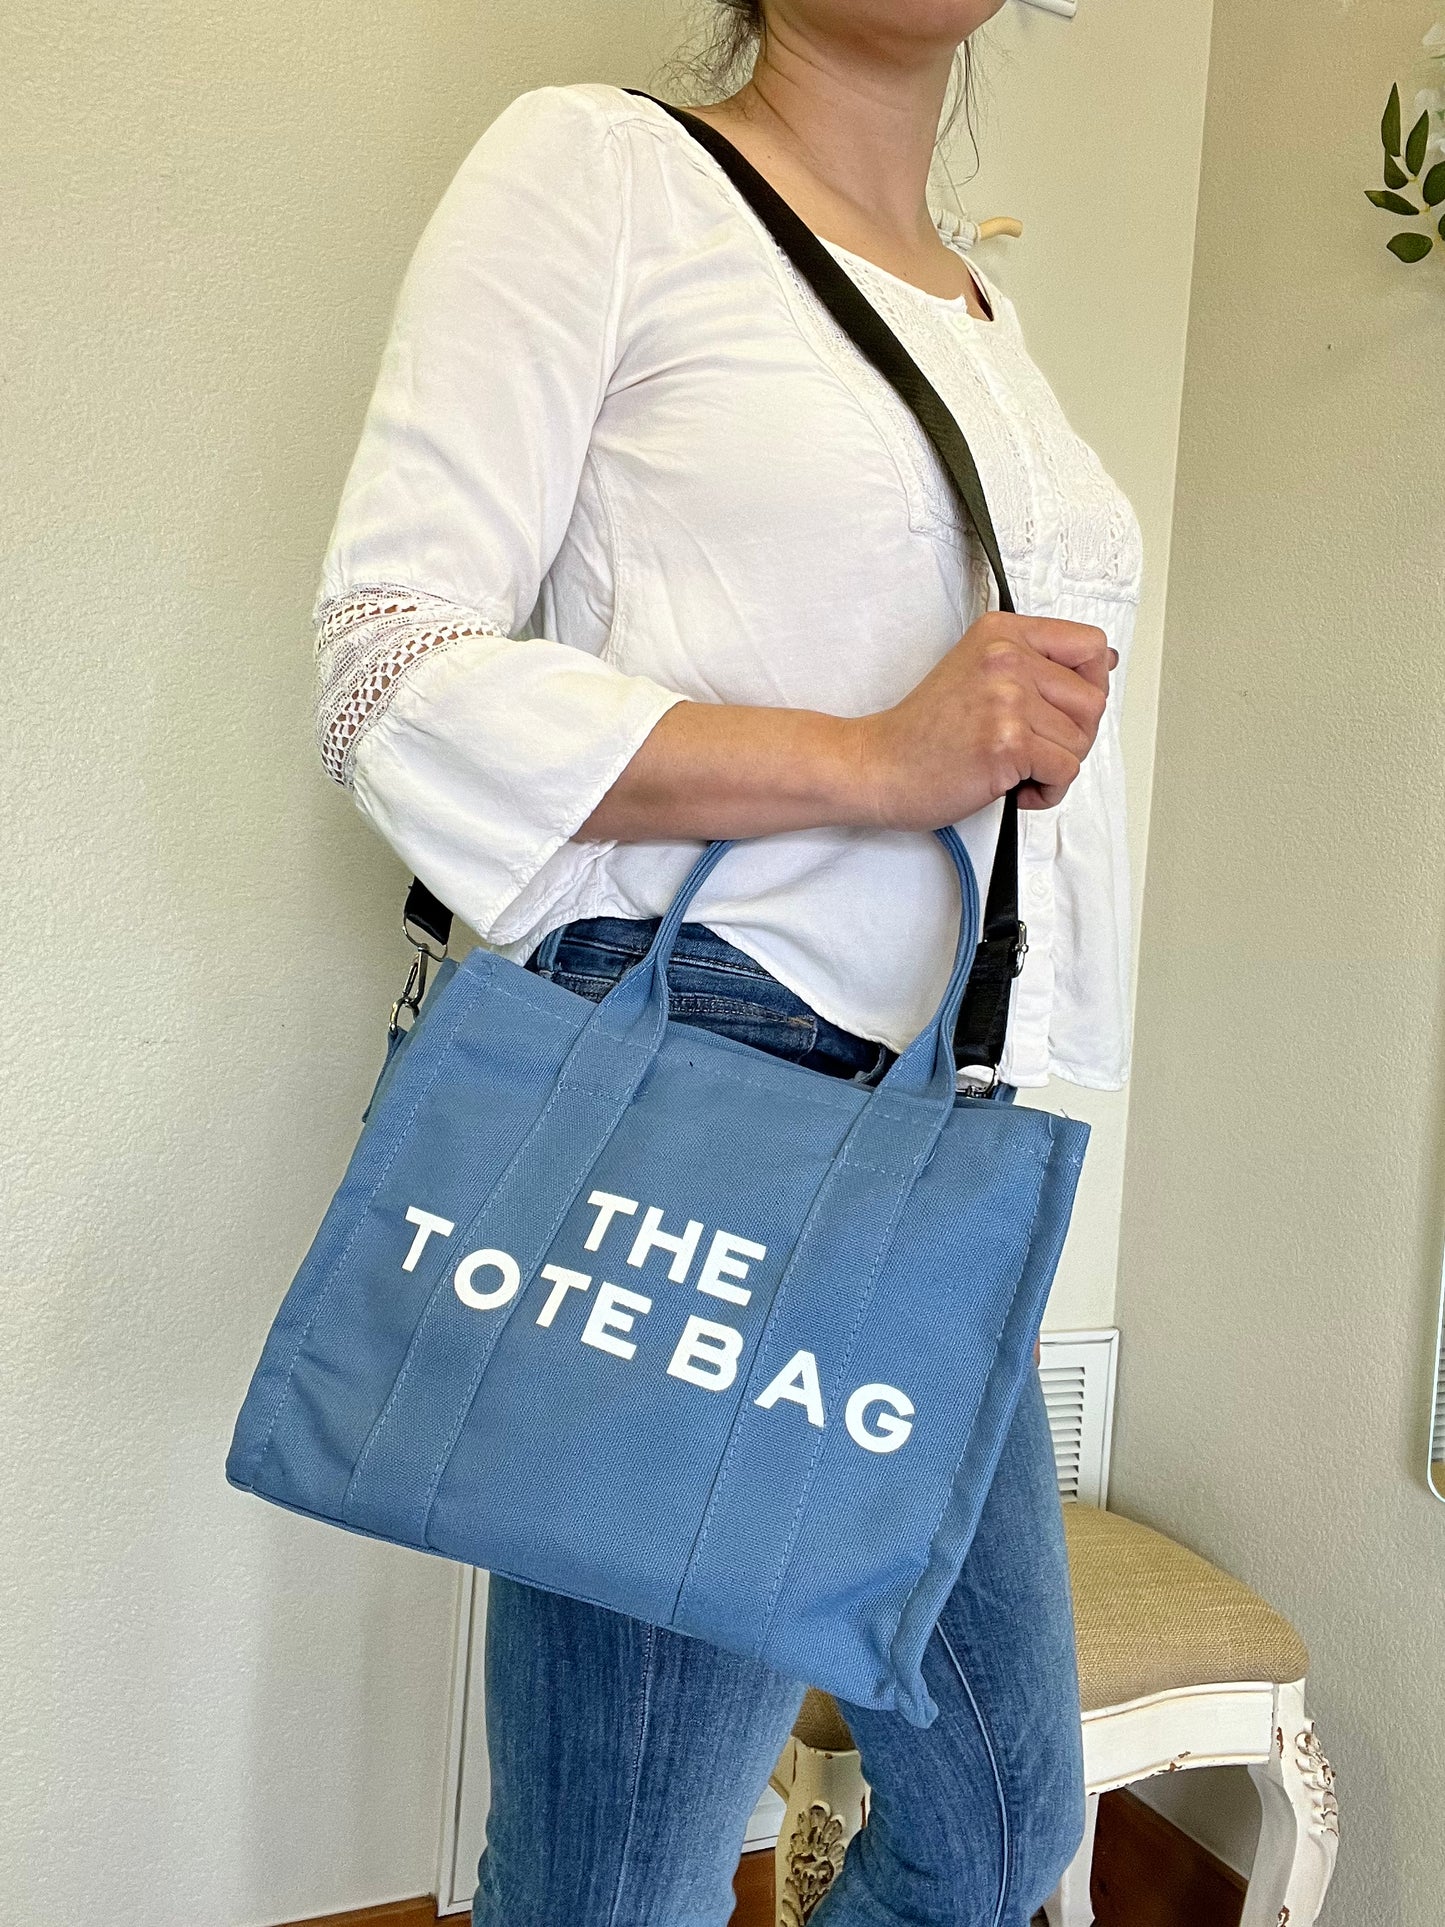 The Tote Bag Canvas Handbag